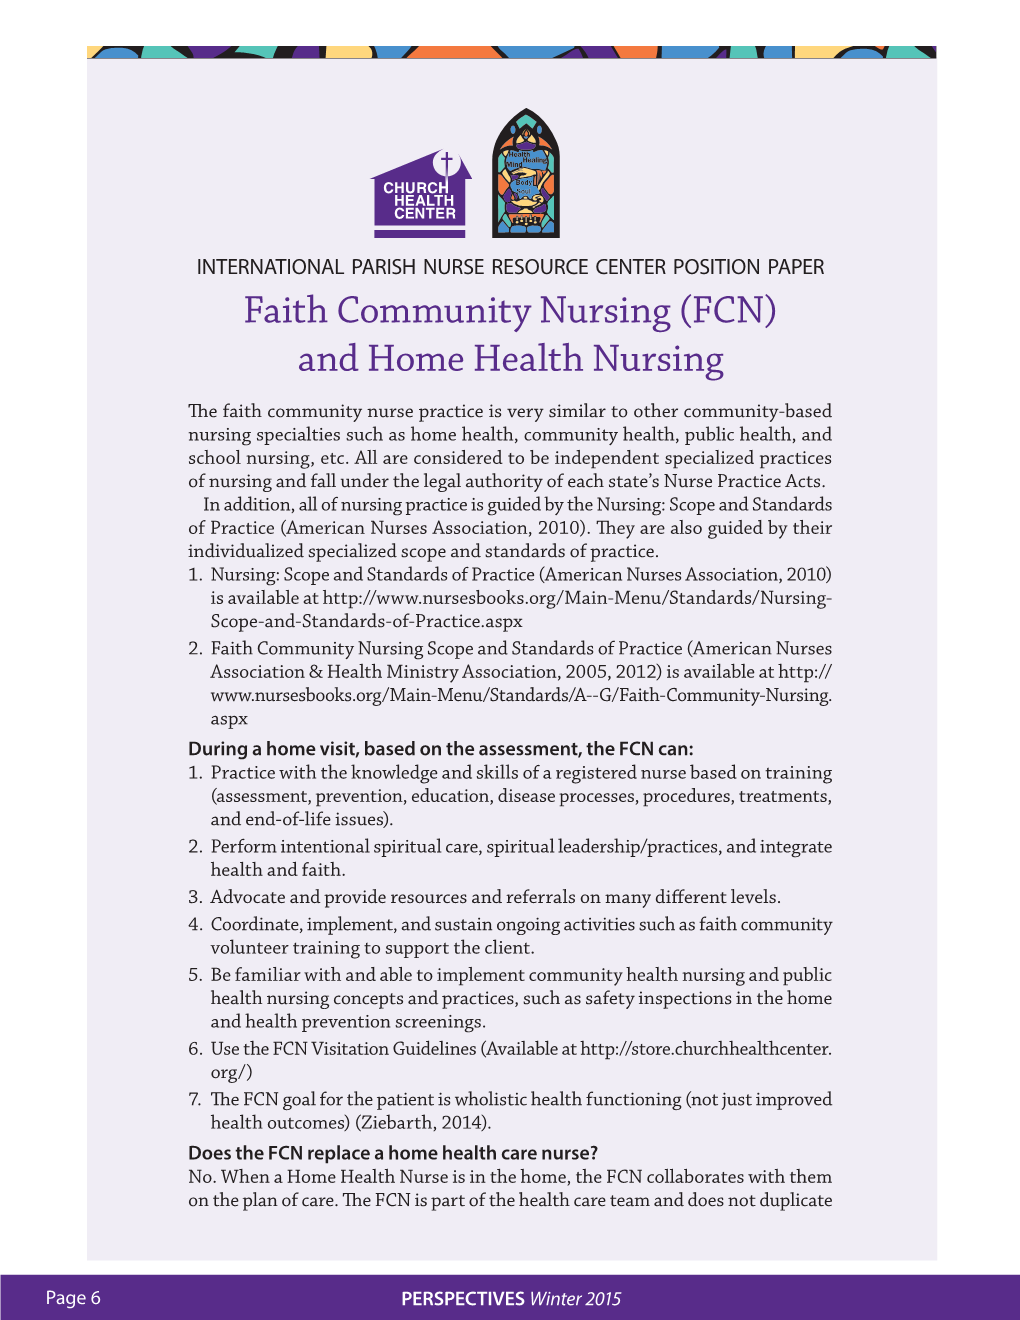 Faith Community Nursing (FCN) and Home Health Nursing